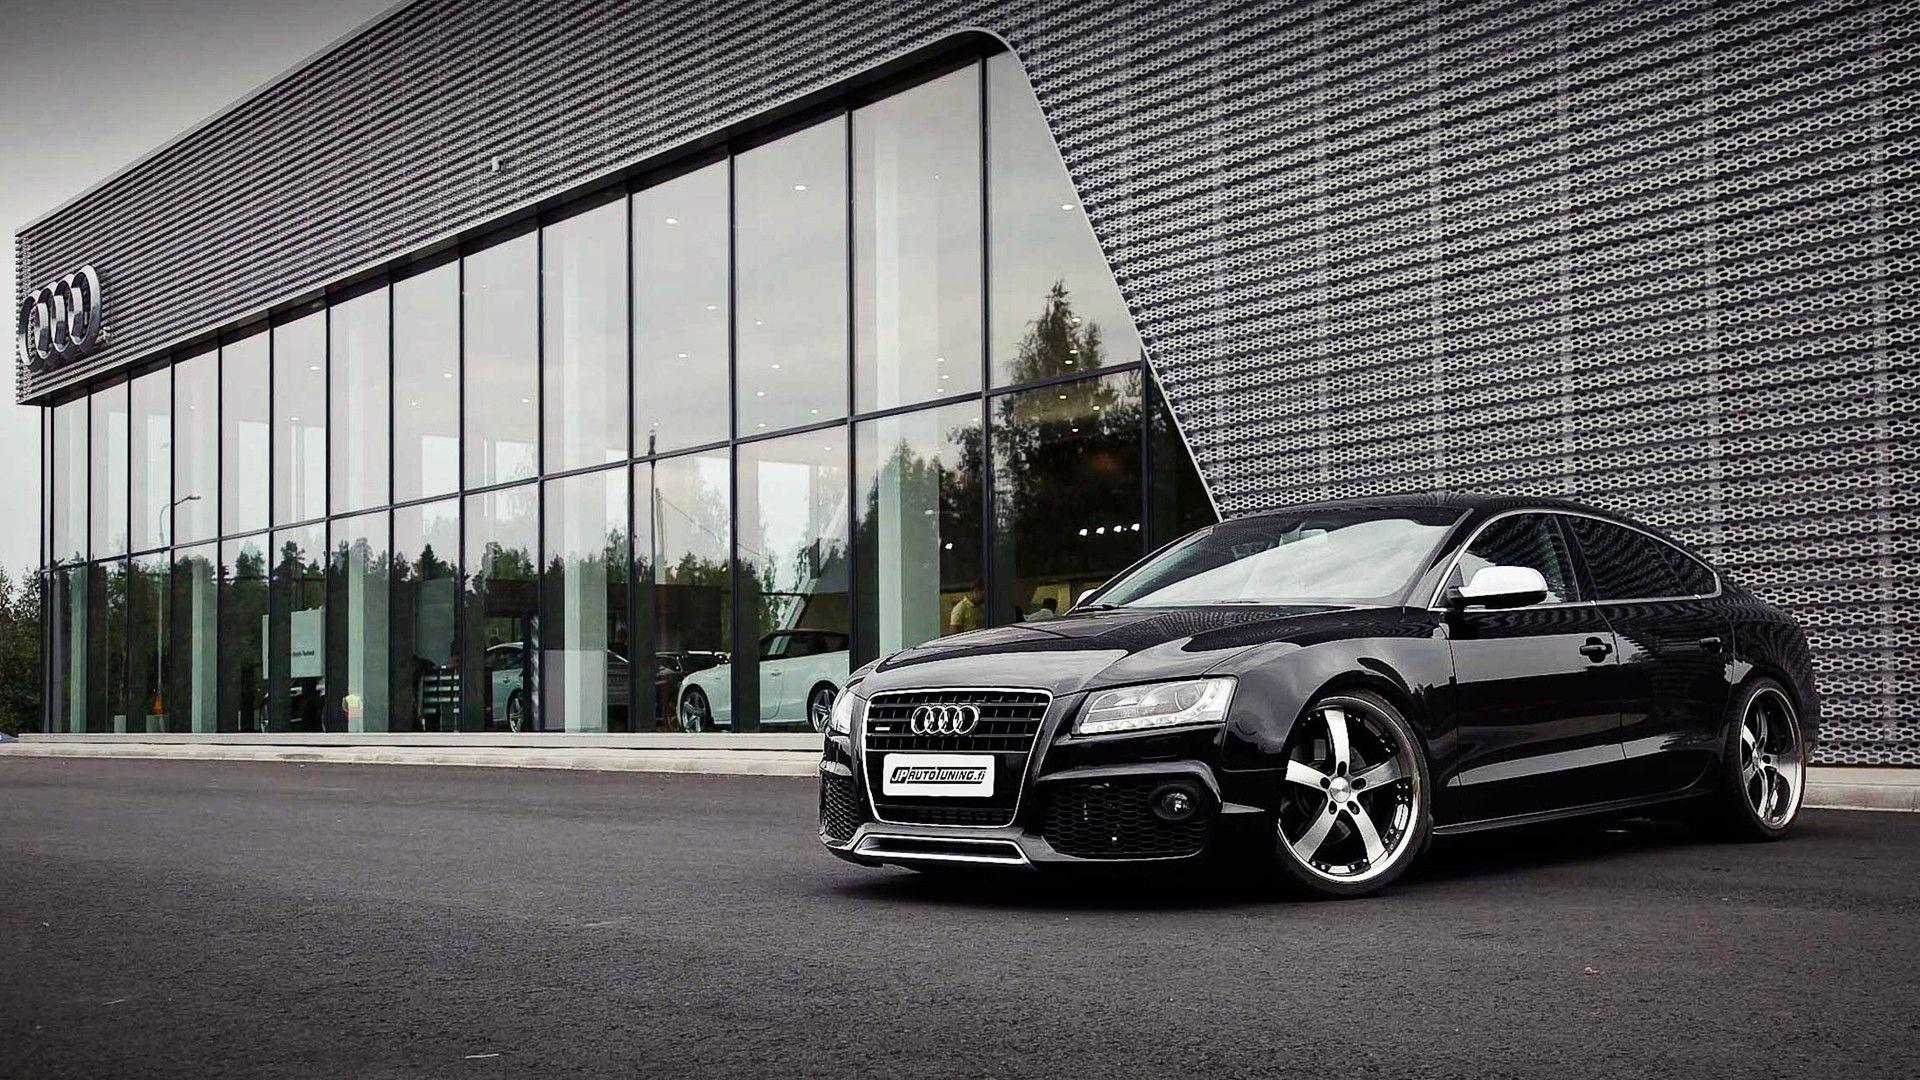 Audi RS5 Black HD Wallpaper, Background Image